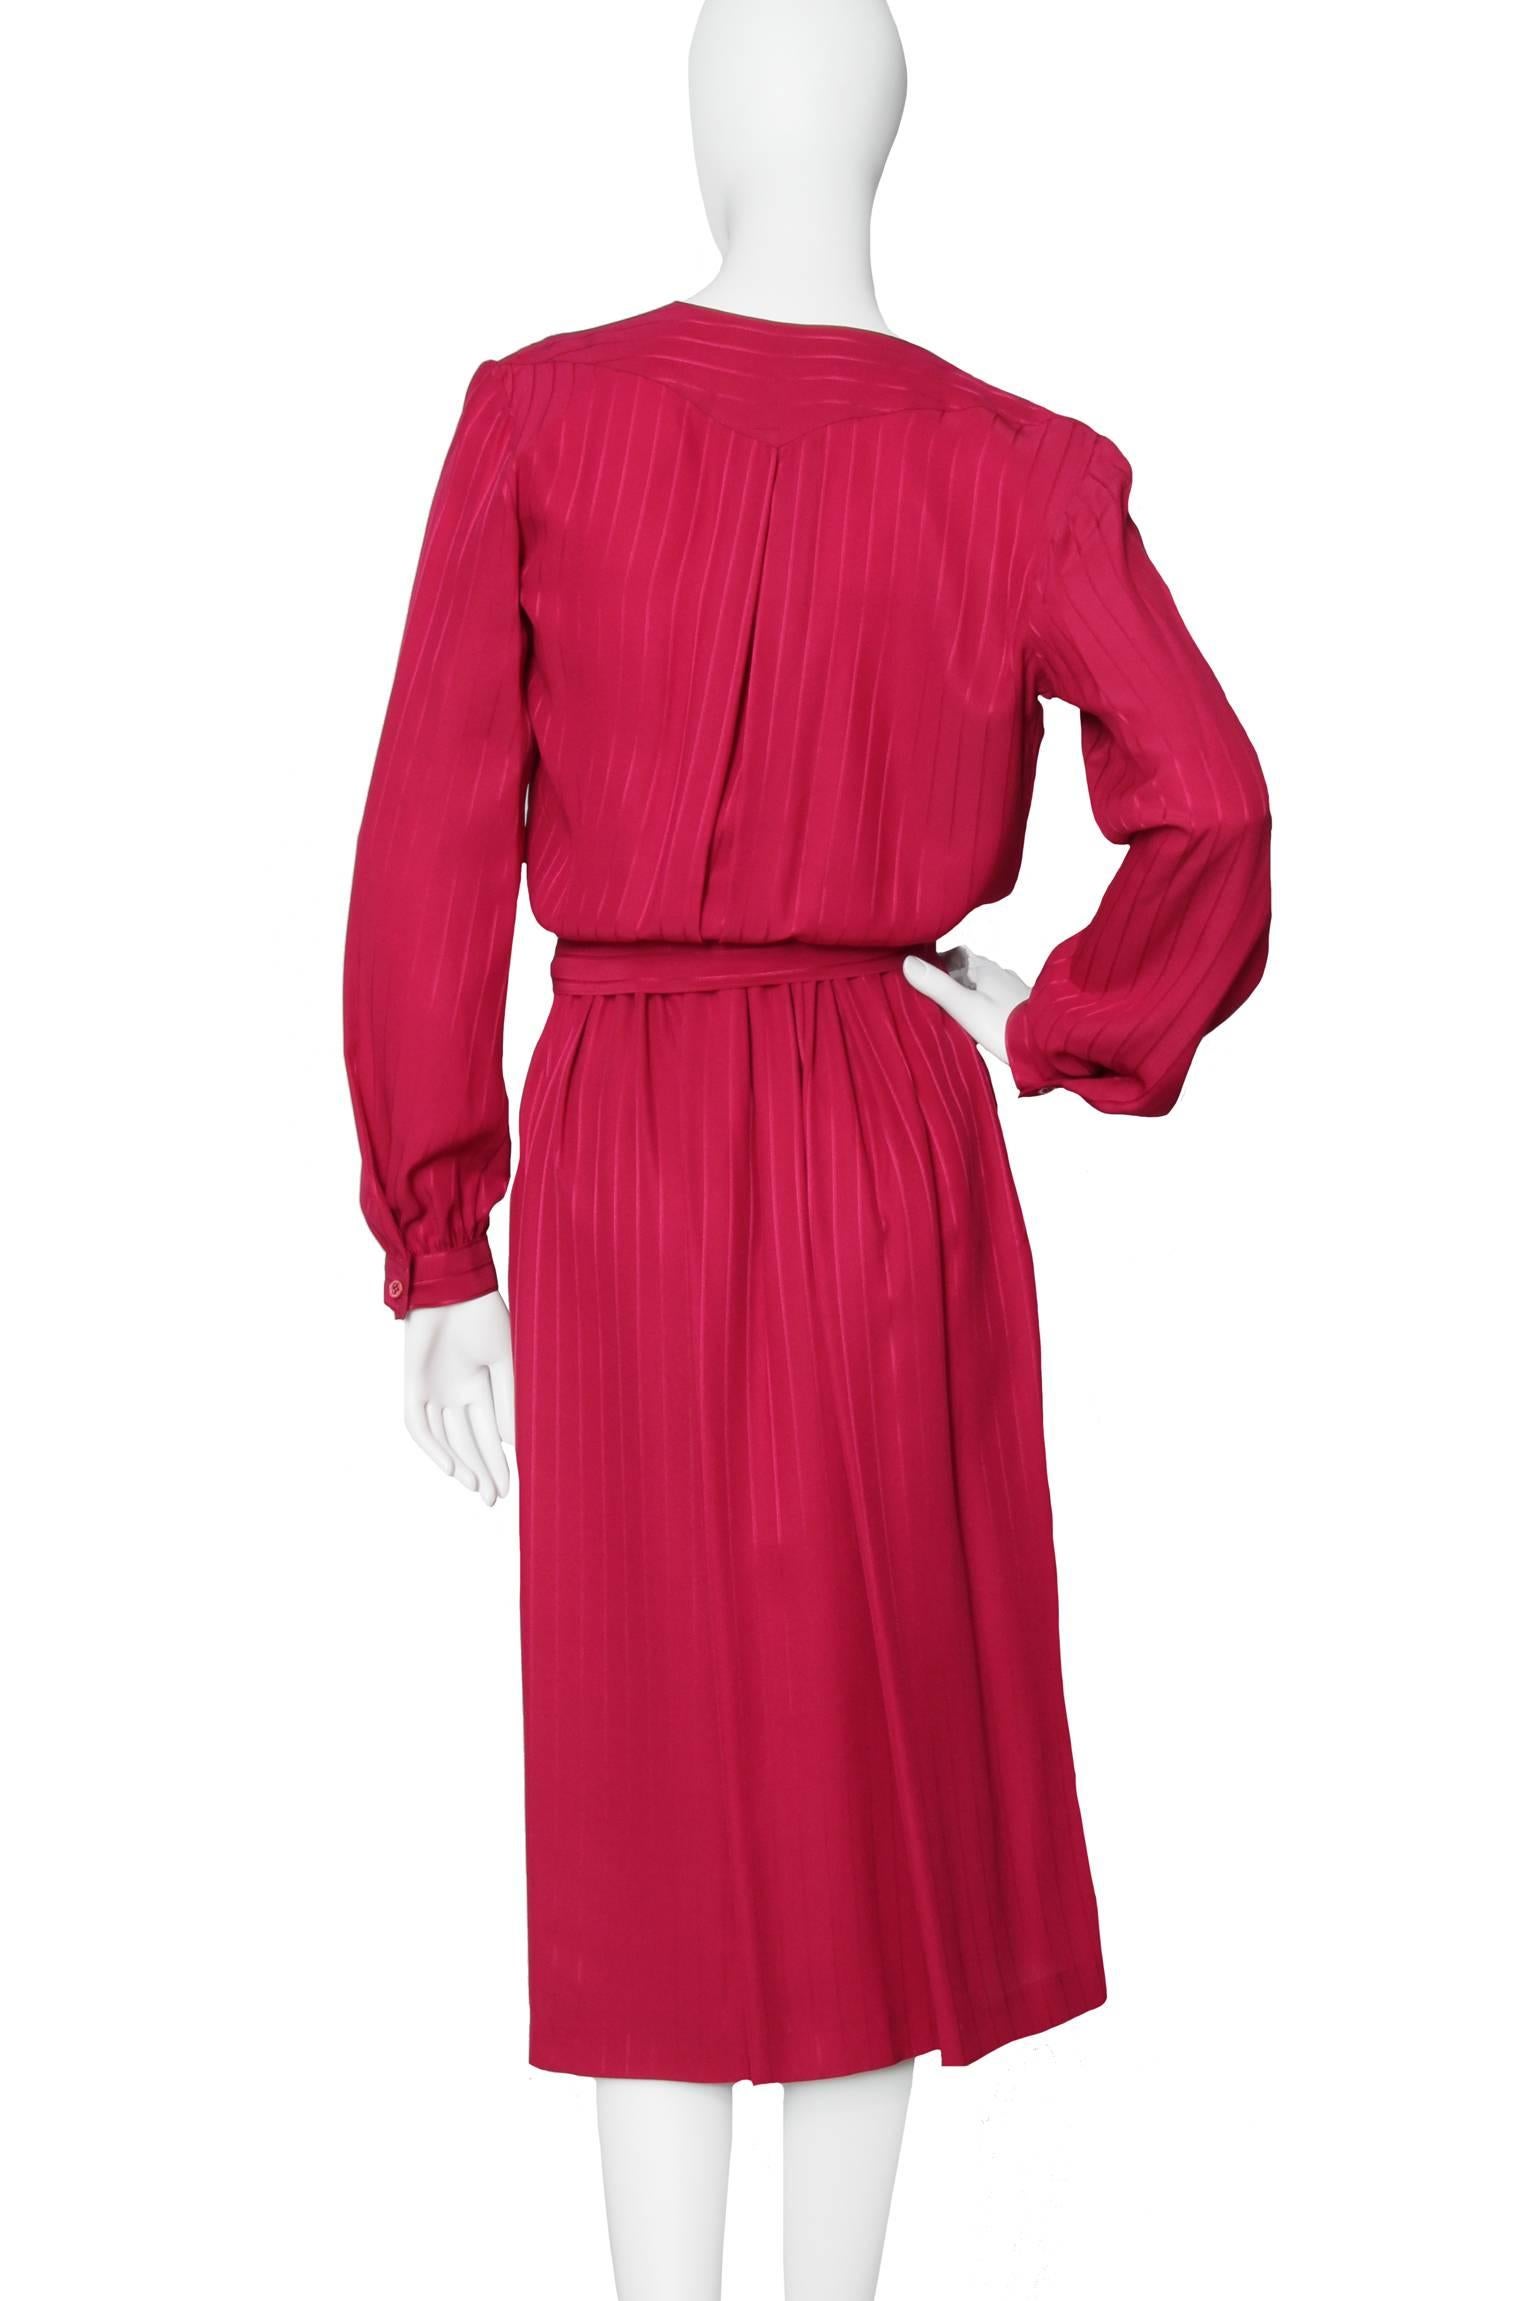 Women's A 1980s Christian Dior Red SIlk Jacquard Skirt & Blouse Ensemble